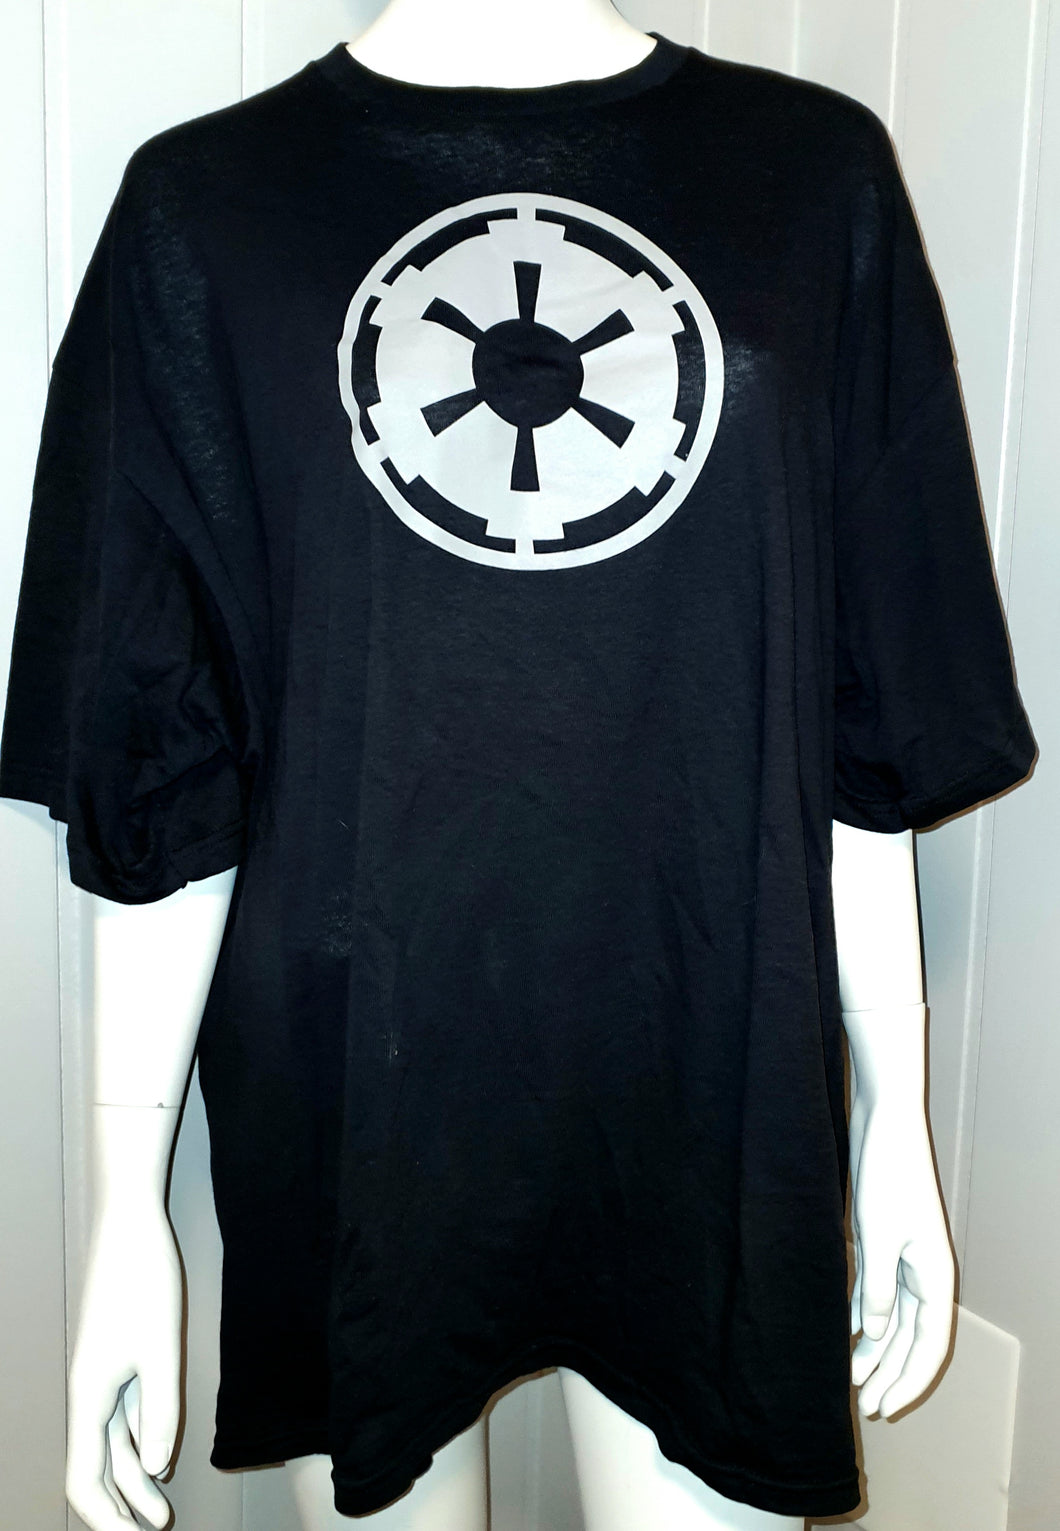 Star Wars t-skjorte med Imperiet logo.